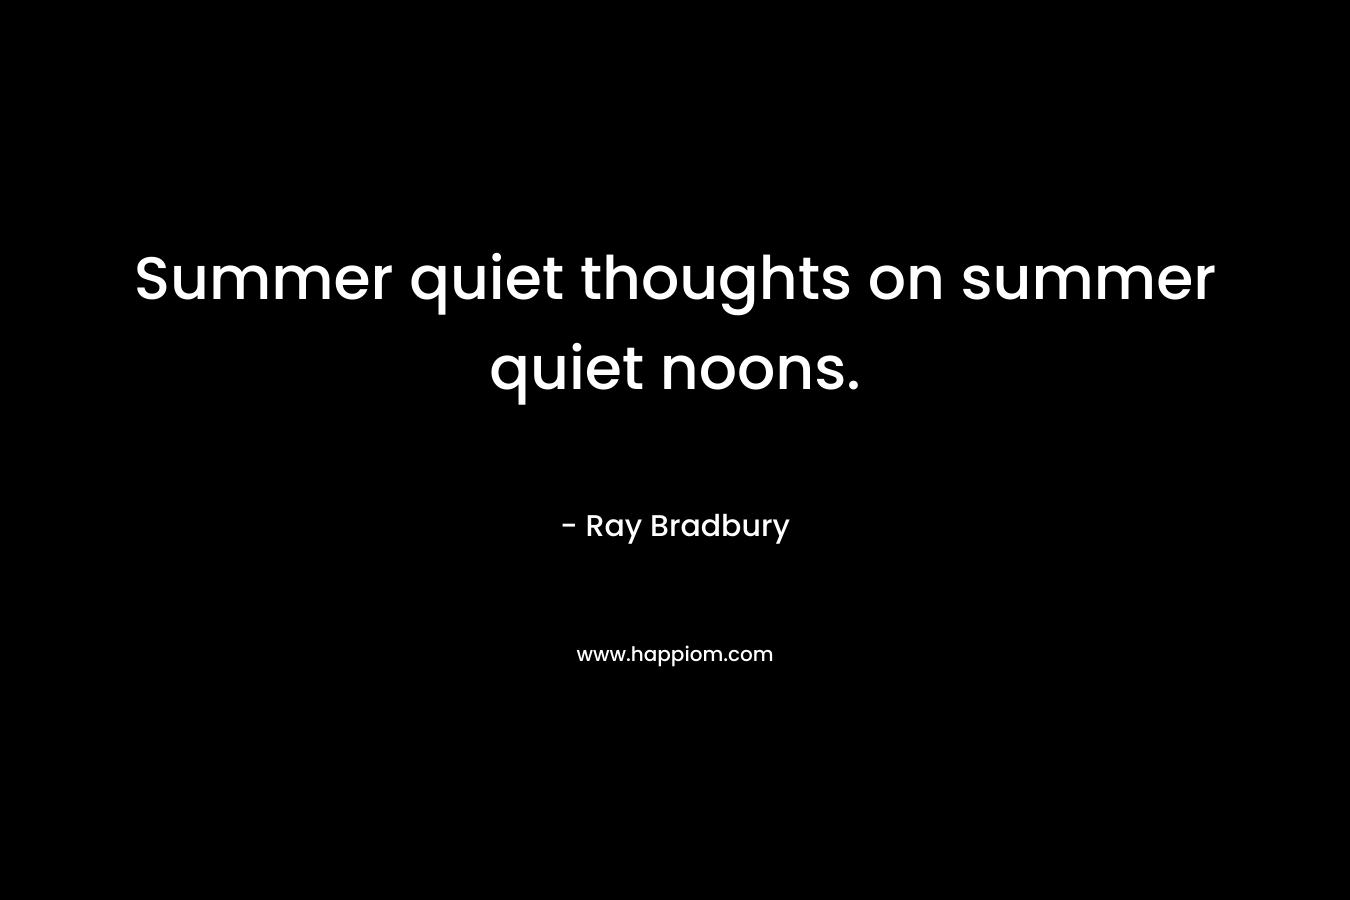 Summer quiet thoughts on summer quiet noons. – Ray Bradbury